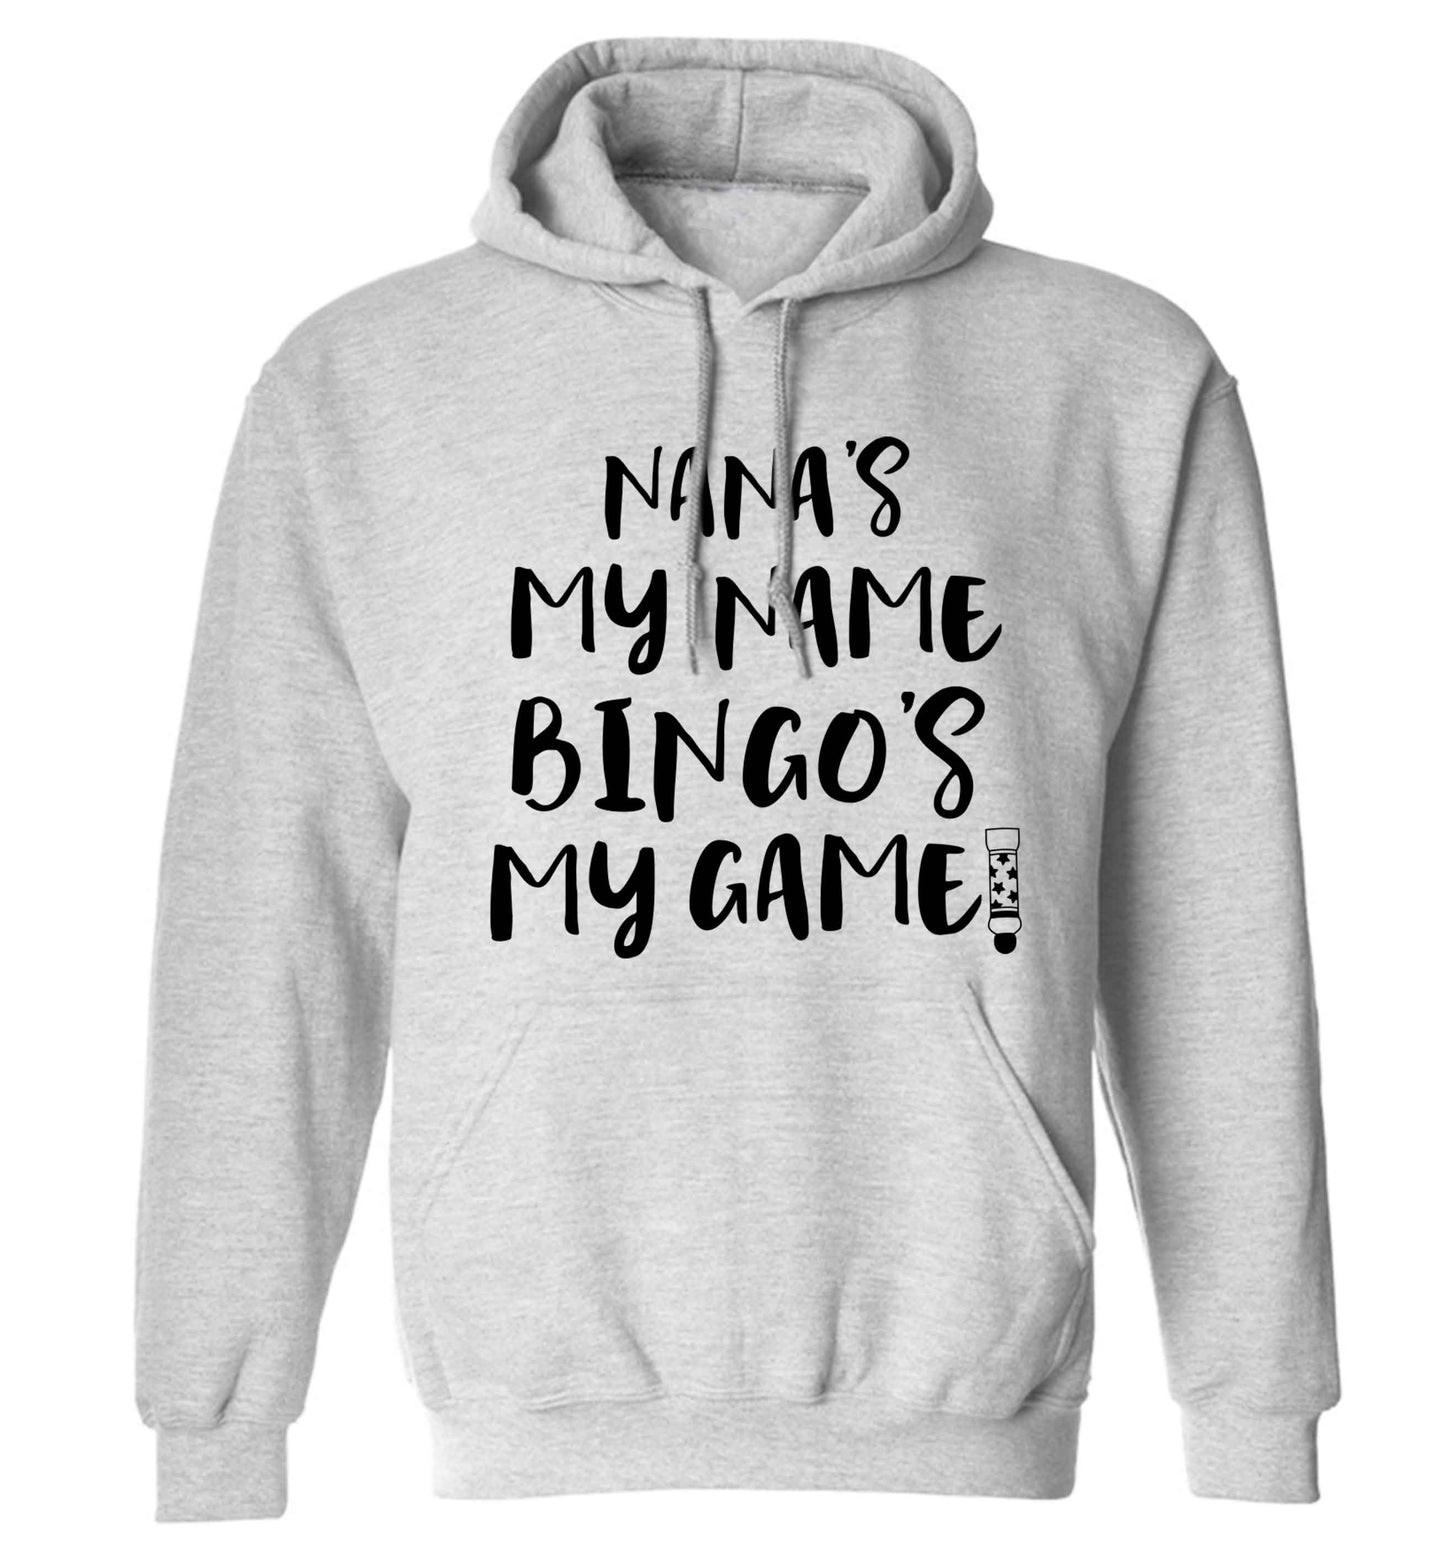 Nana's my name bingo's my game! adults unisex grey hoodie 2XL